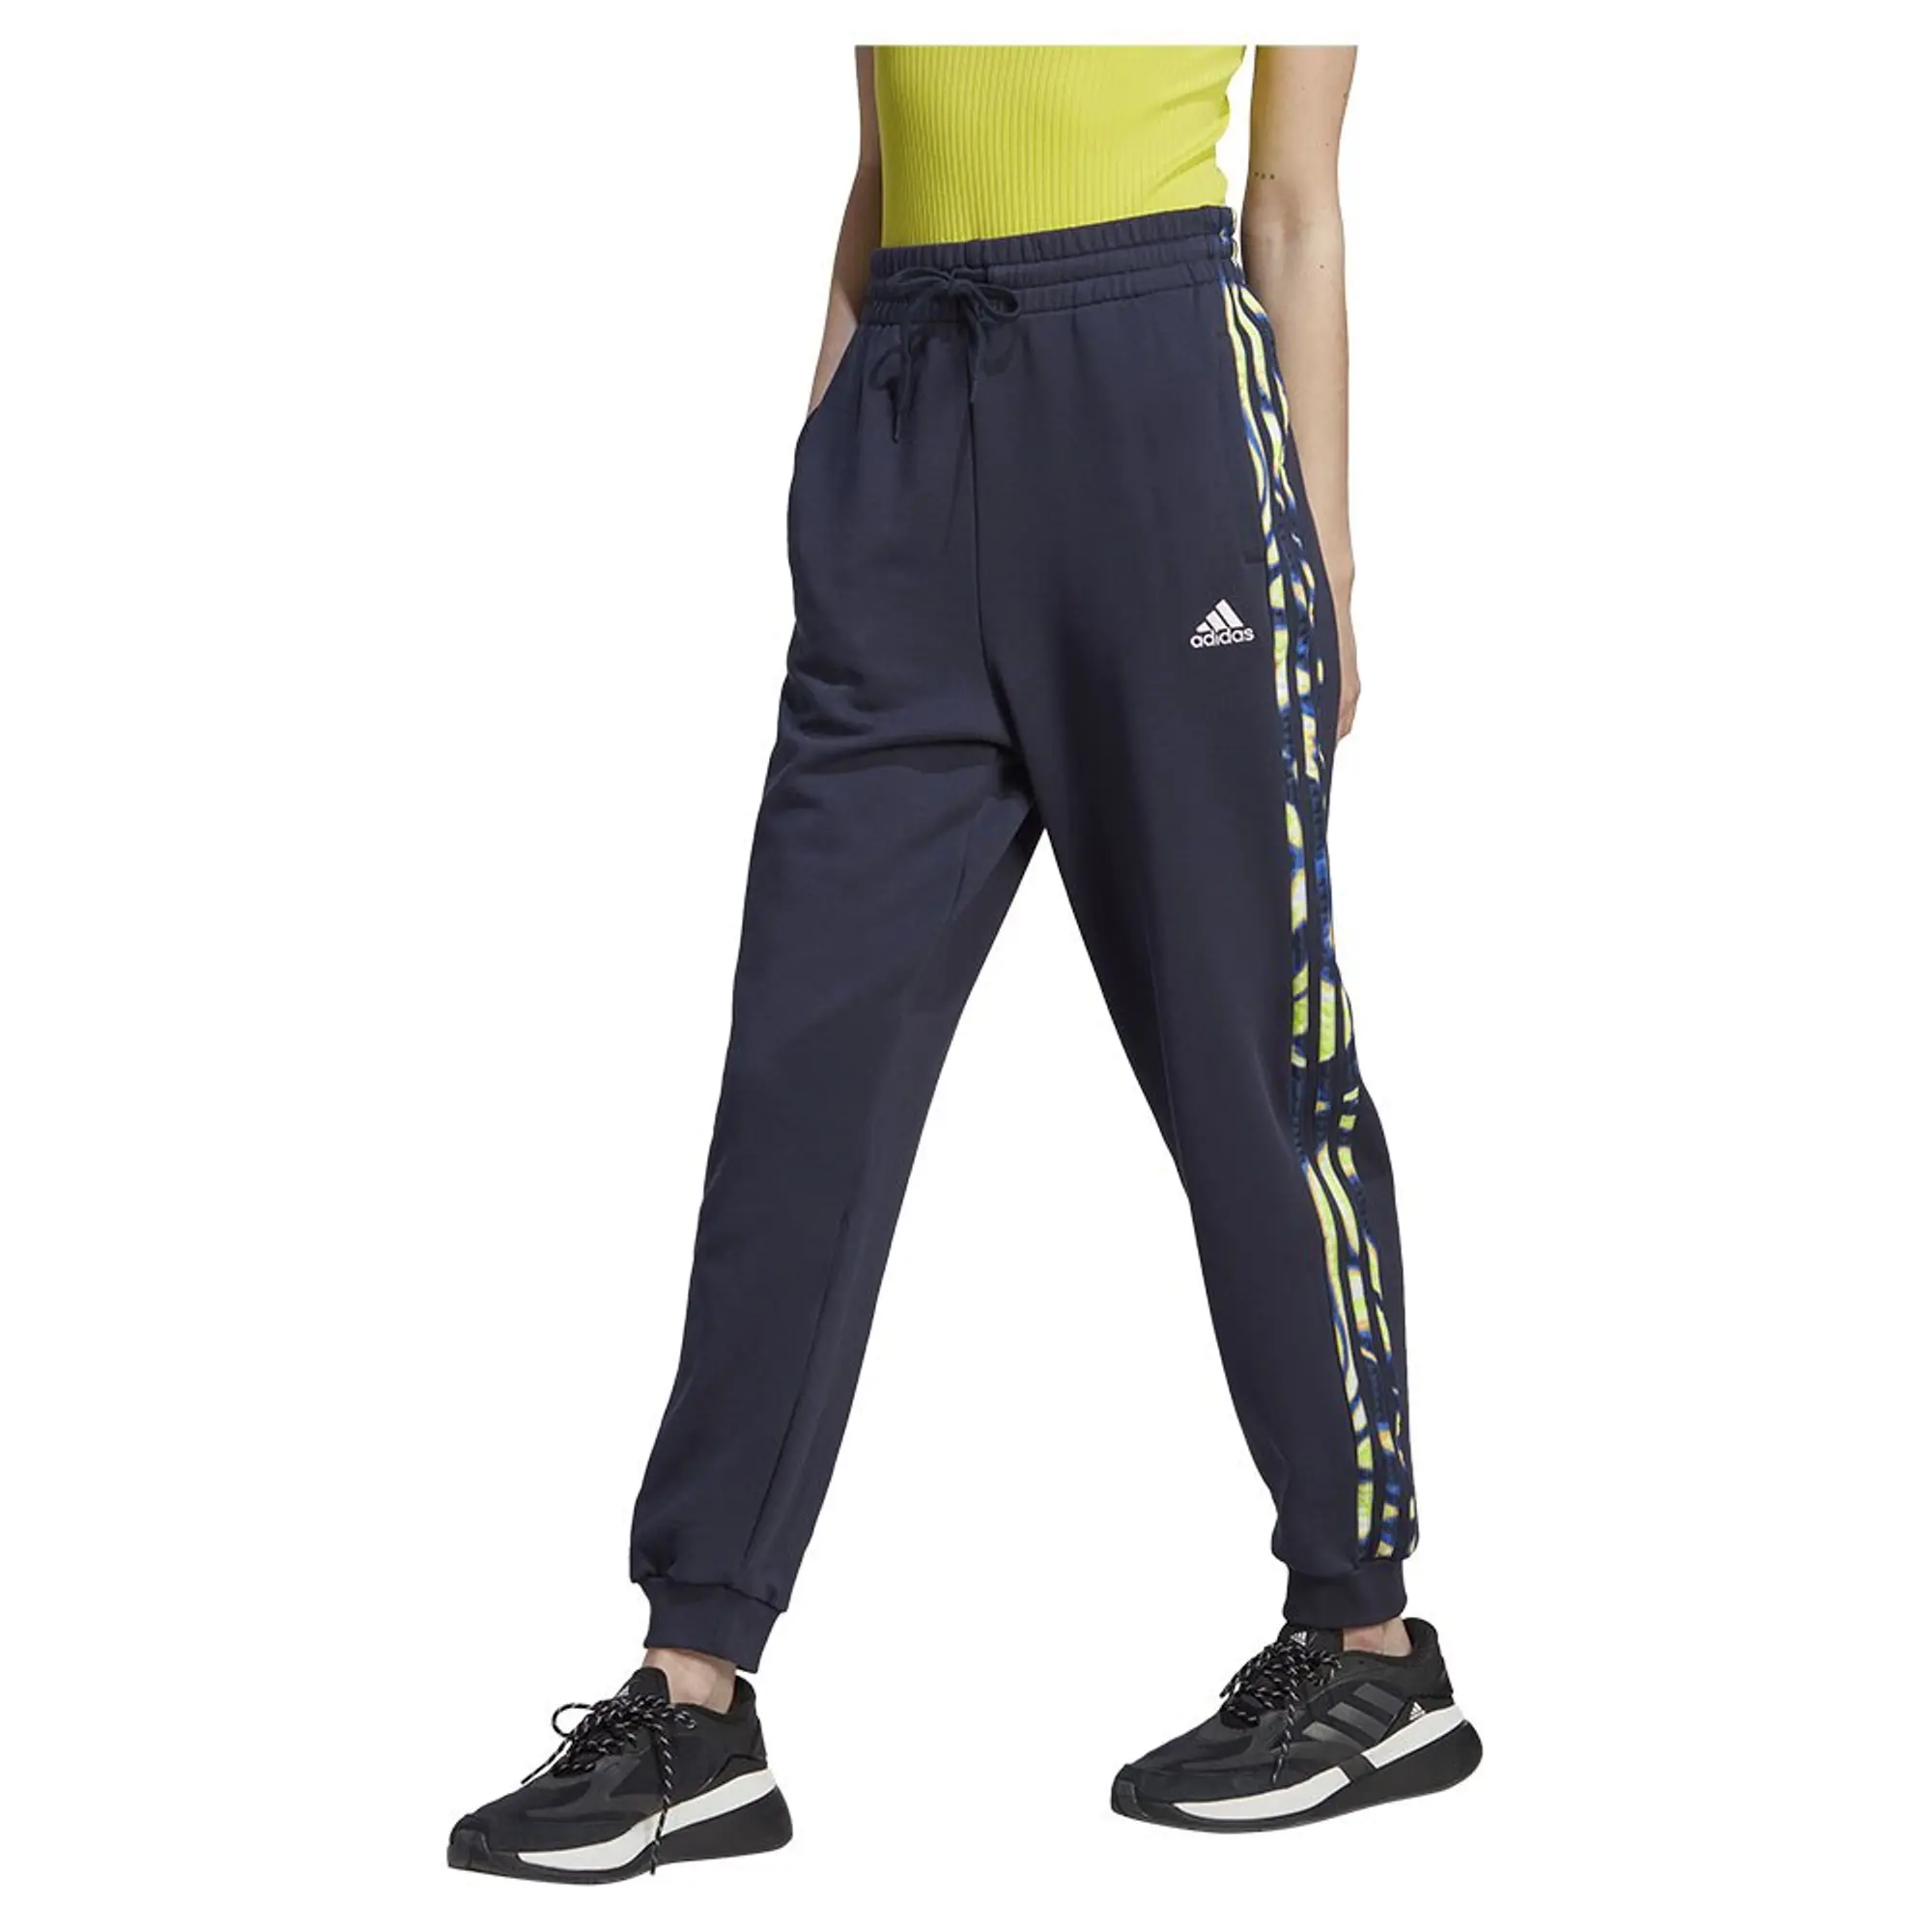 Adidas Sportswear Vibrant Print 3 Stripes Joggers Pants XL Woman -, IL5863